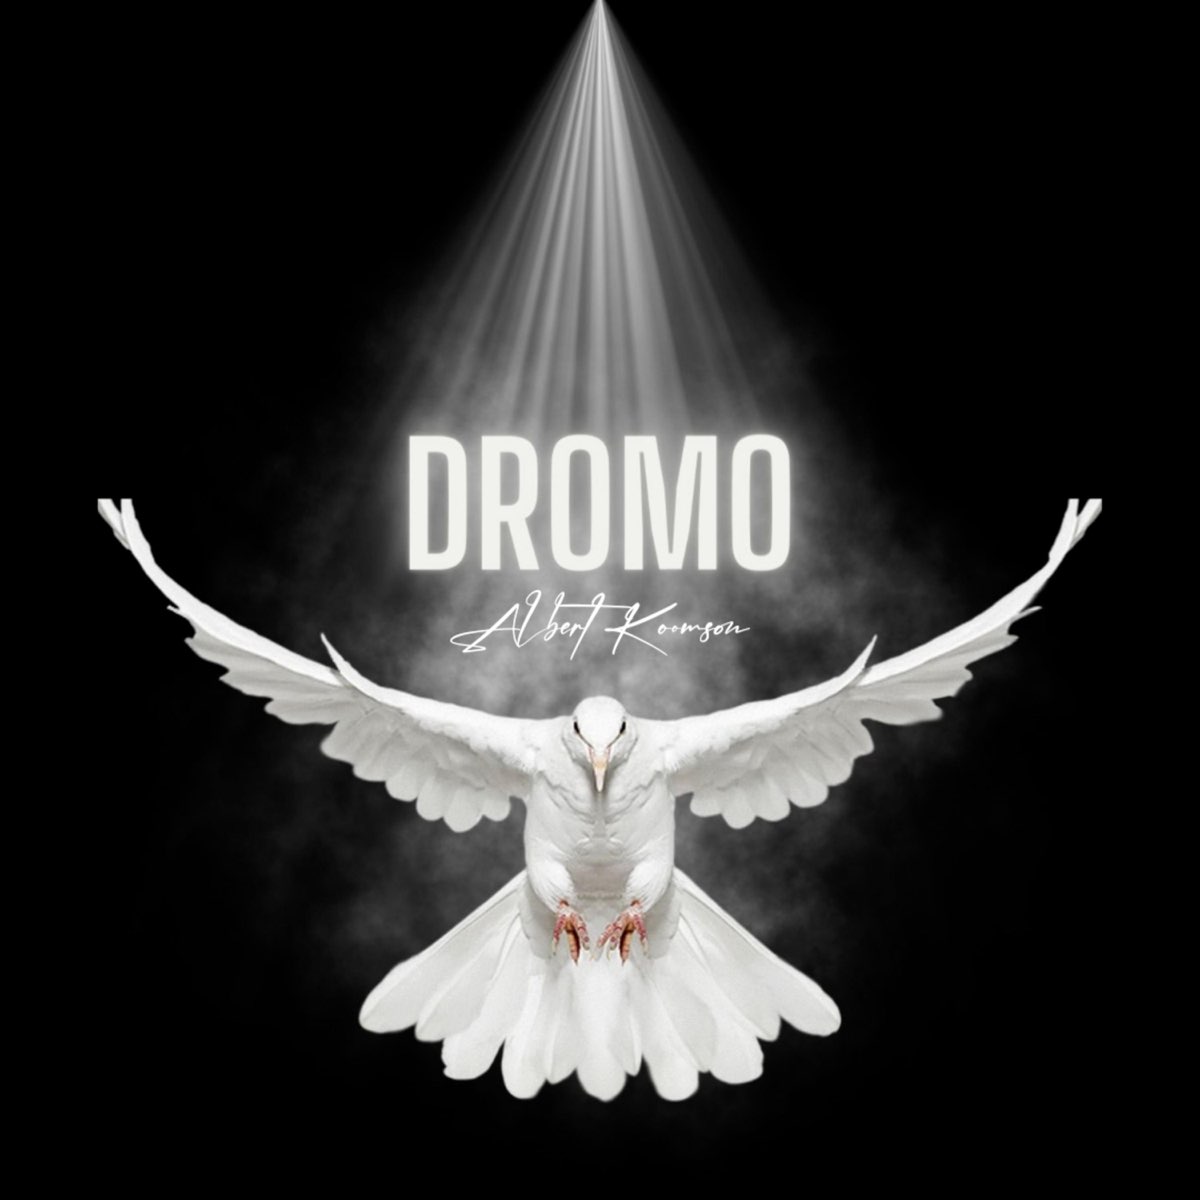 ‎Dromo - Single - Album by Albert Koomson - Apple Music